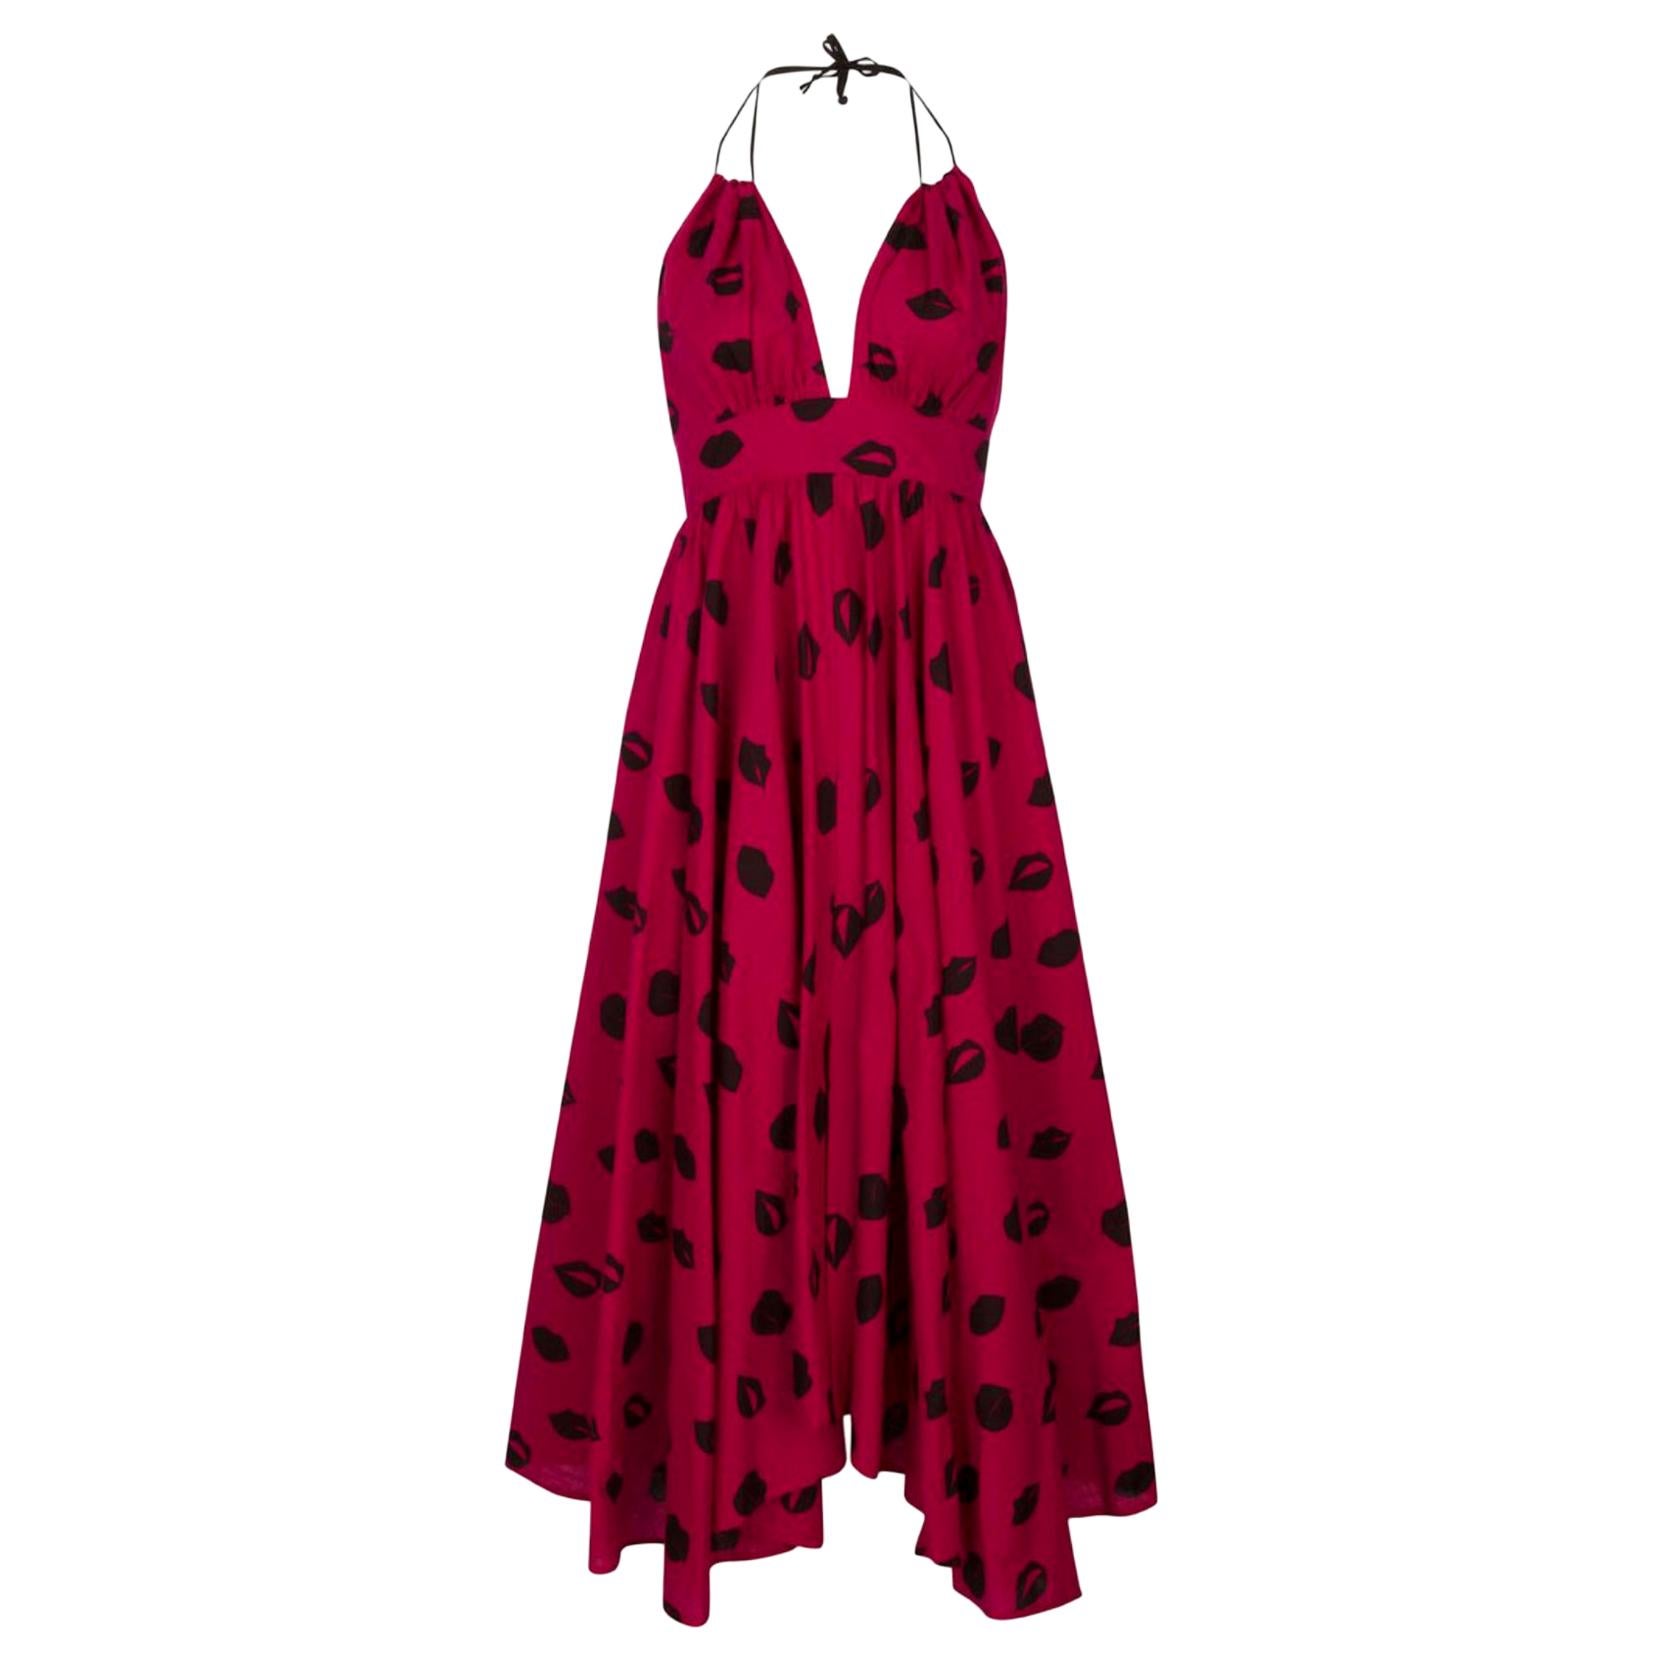 LeSwim Red and Black Lips Print Halter Midi Dress Size XS